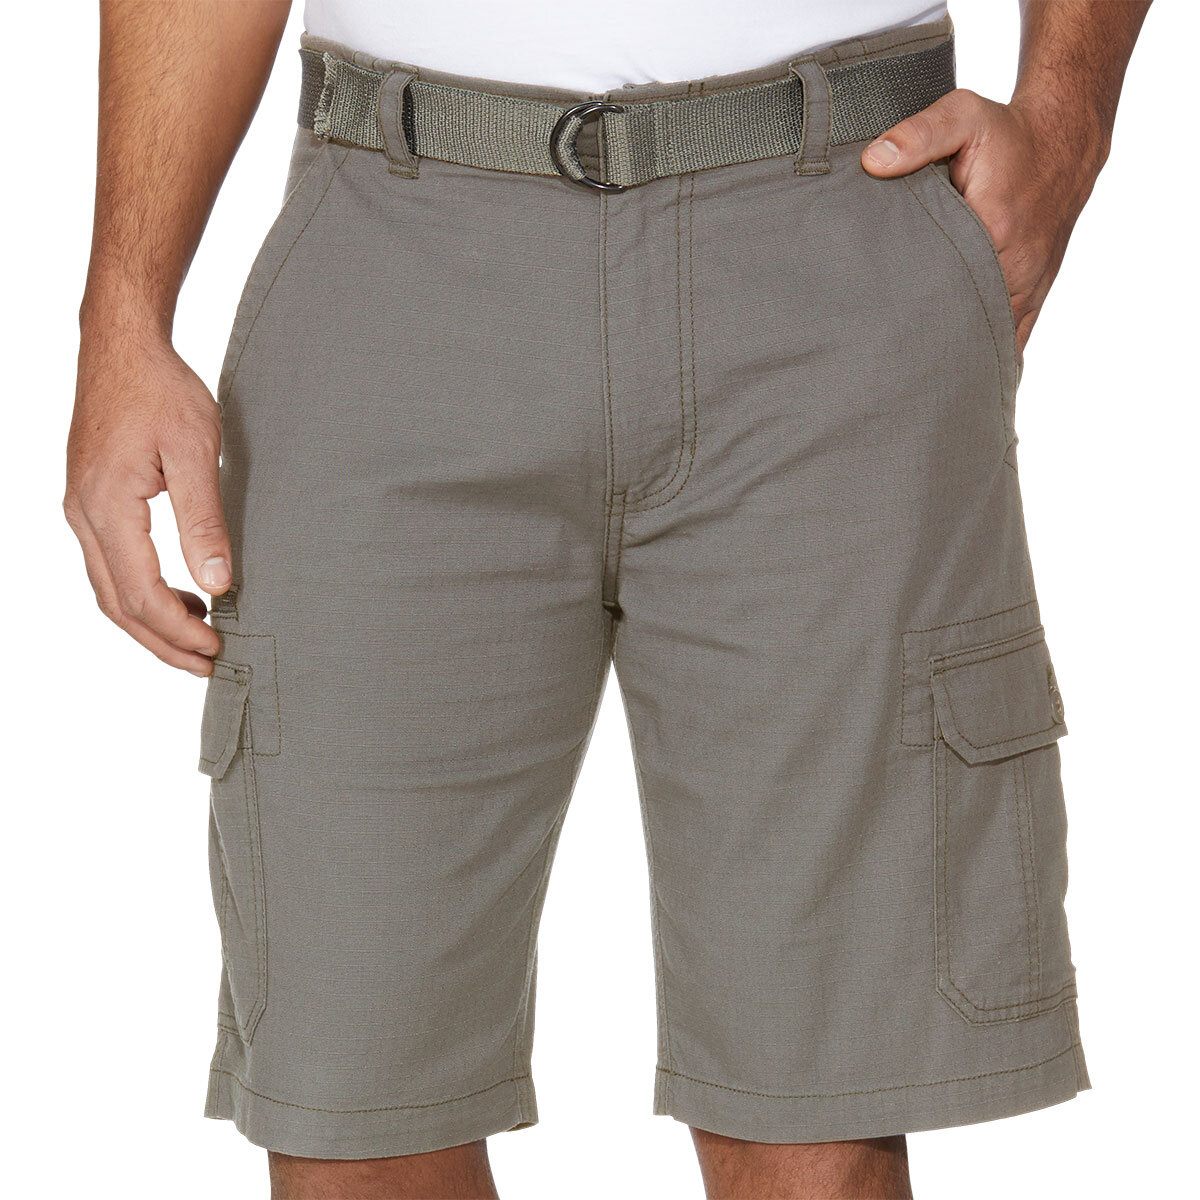 Front image of grey shorts